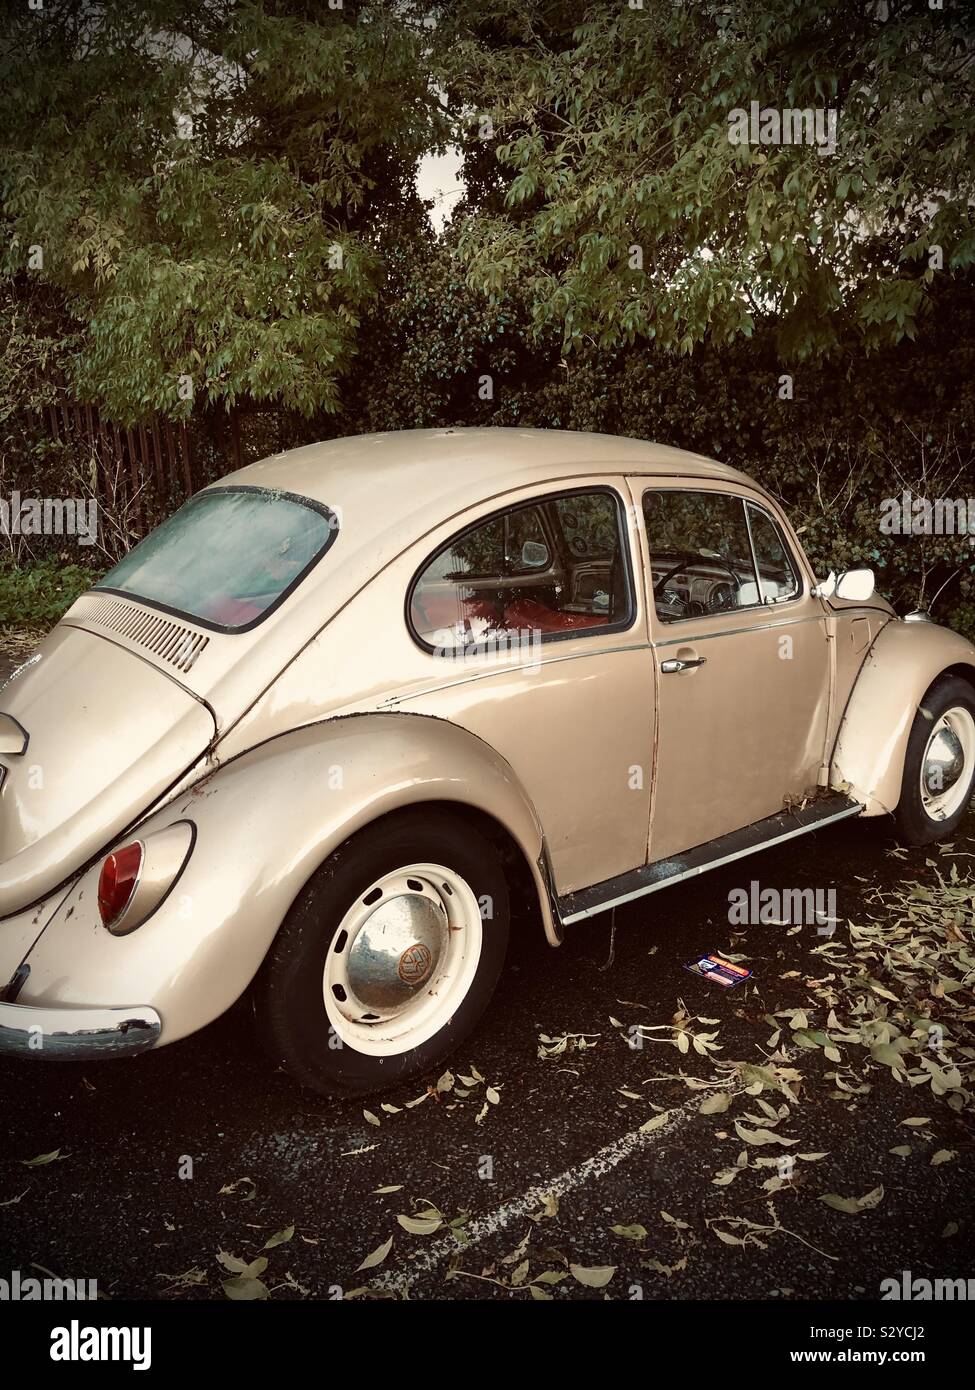 1968 volkswagen beetle vintage car parked under autumnal trees in Dublin, Ireland. Stock Photo